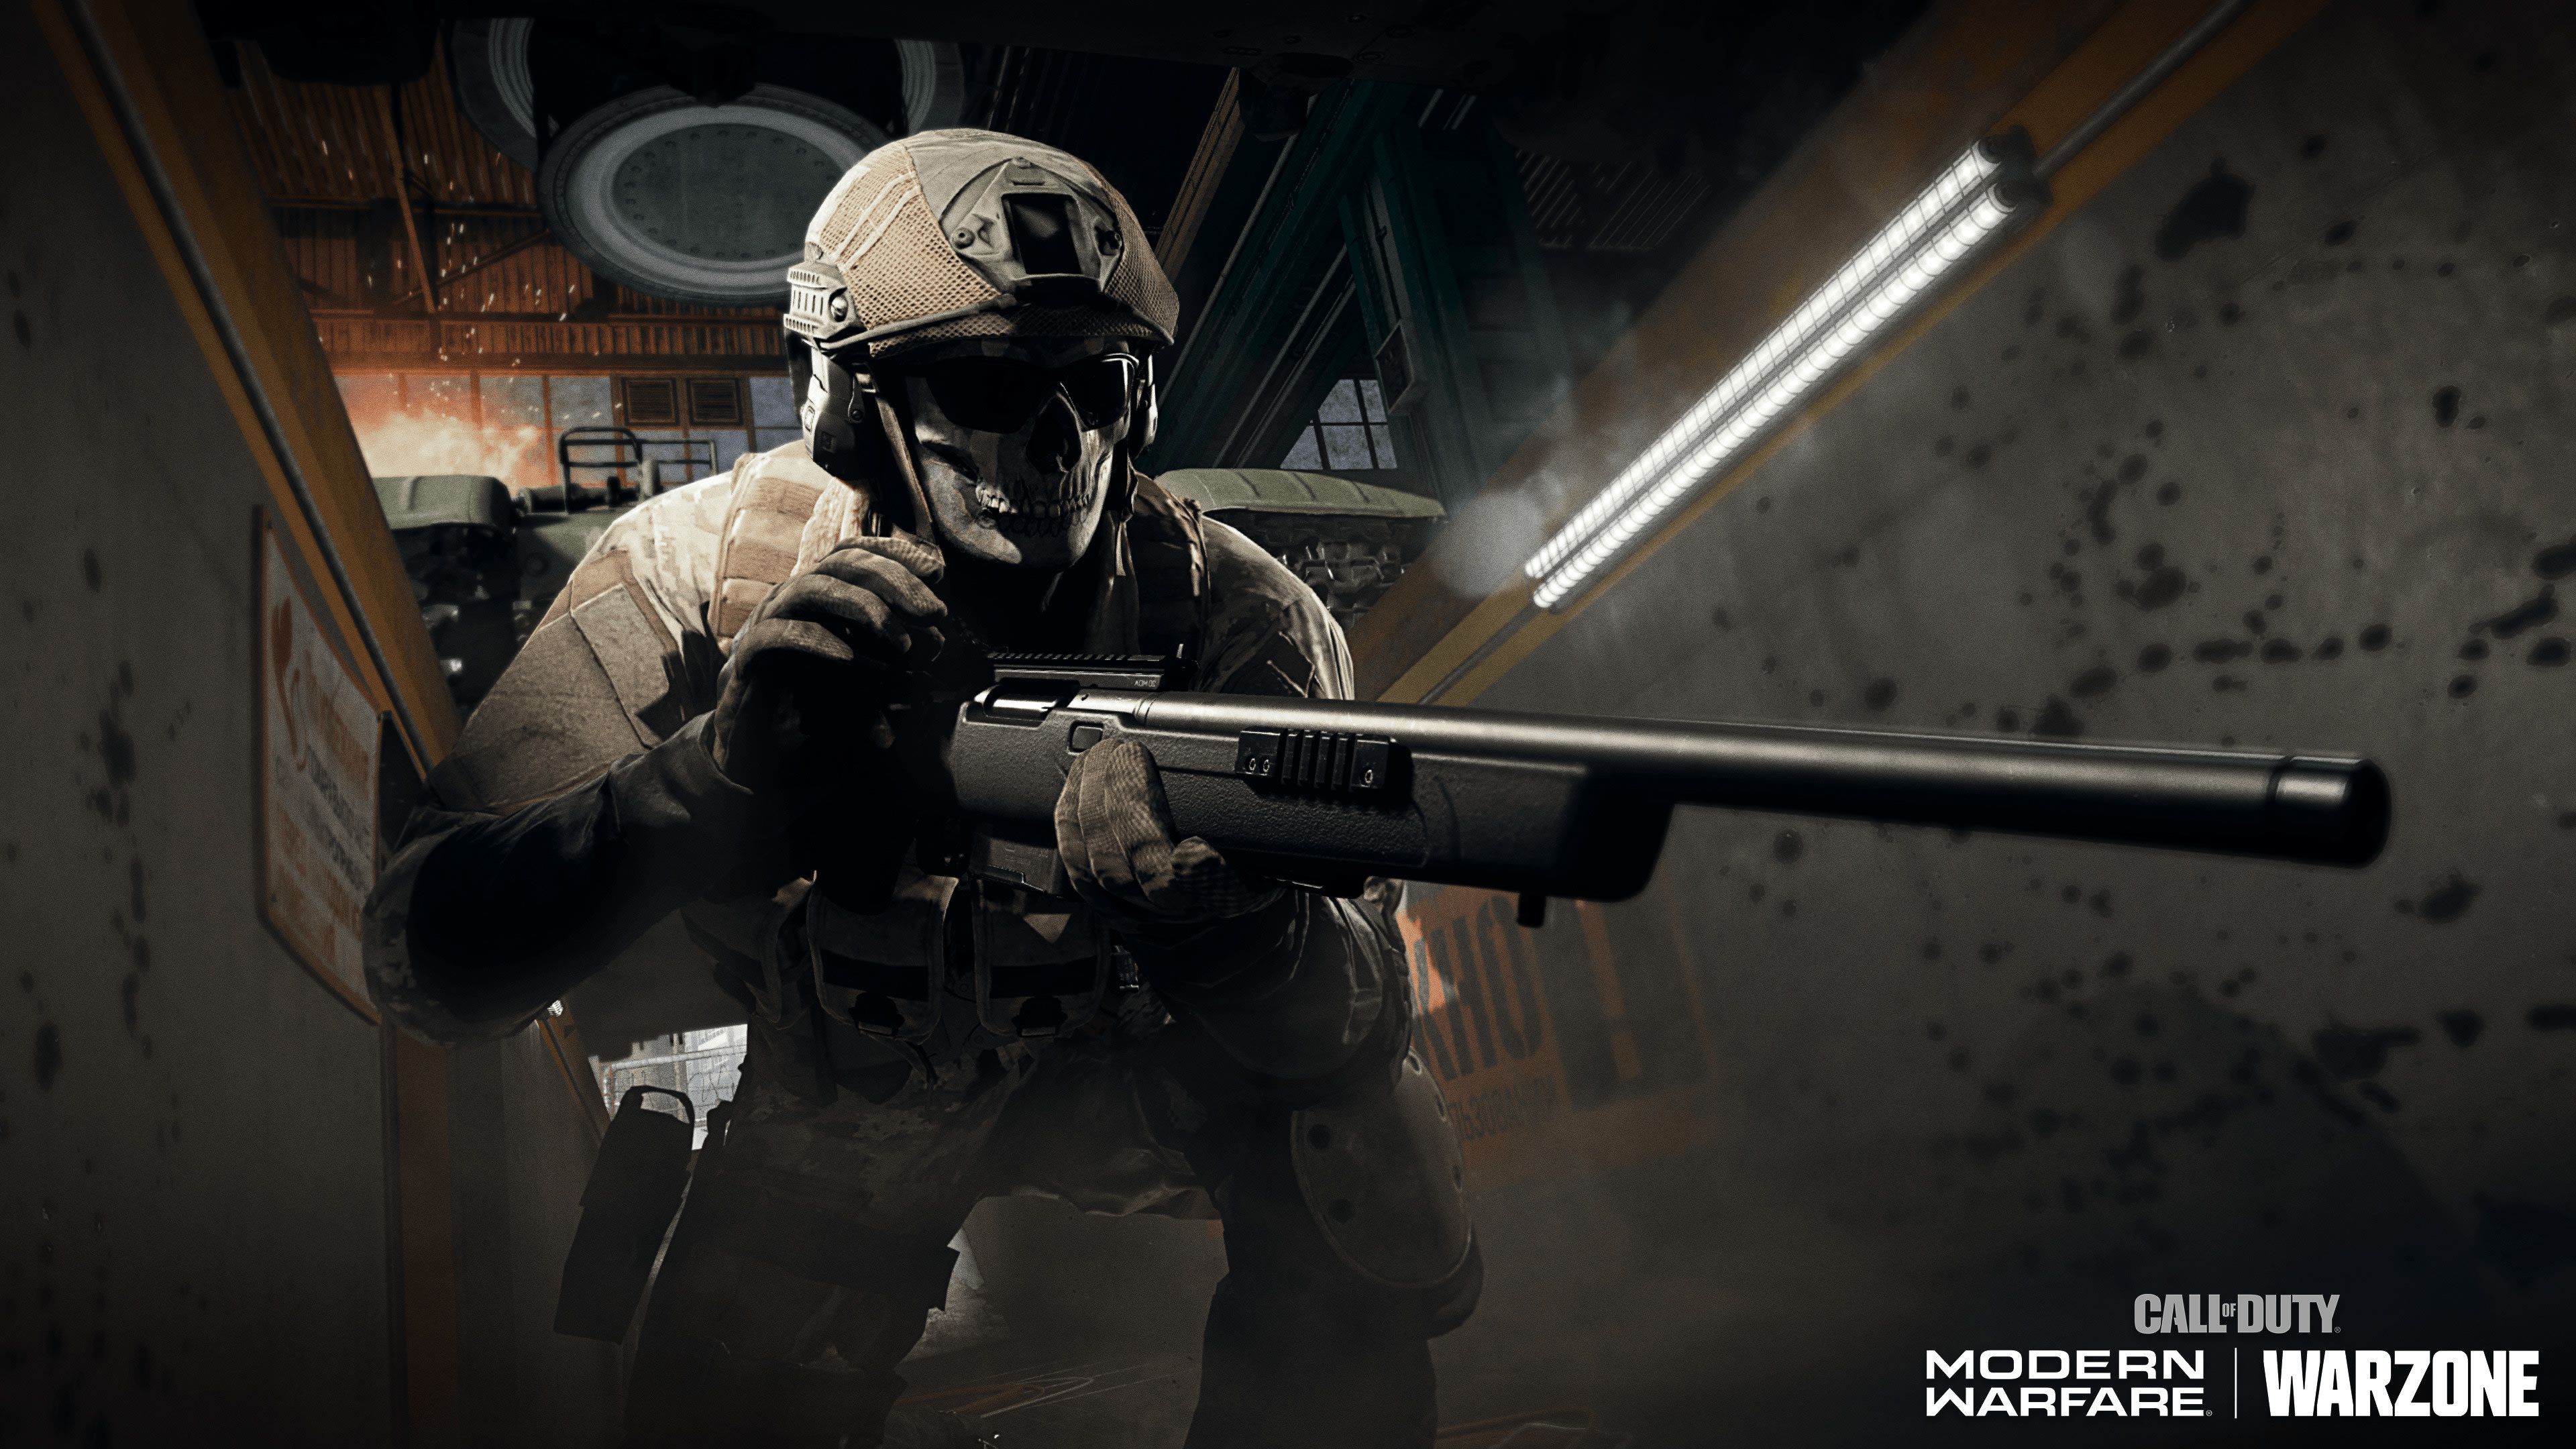 Call of Duty: Modern Warfare Wallpaper 4K, Call of Duty Warzone, Online games, Games